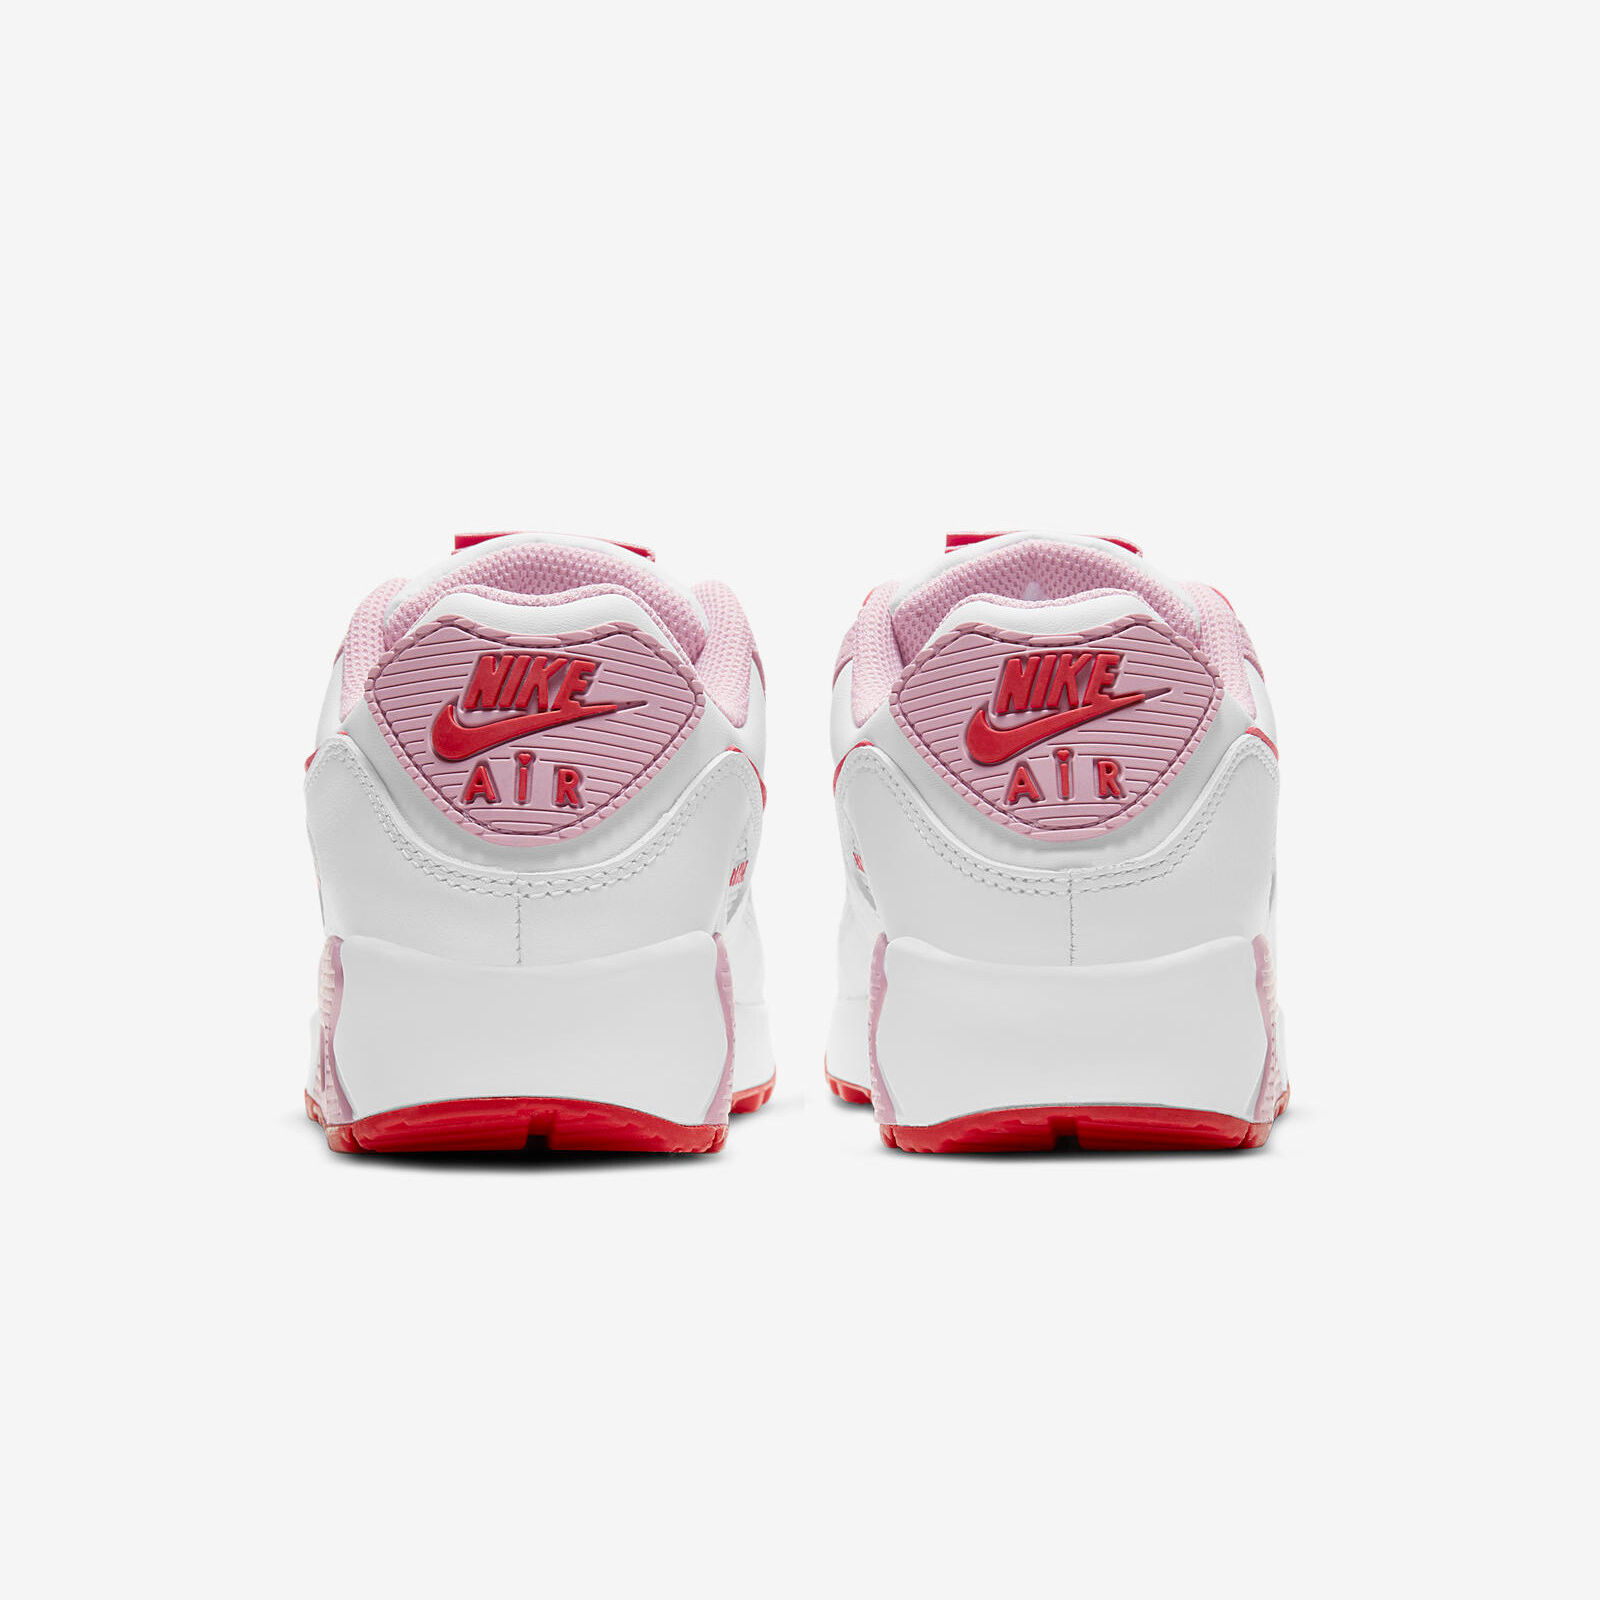 Nike Air Max 90
« Valentine’s Day »